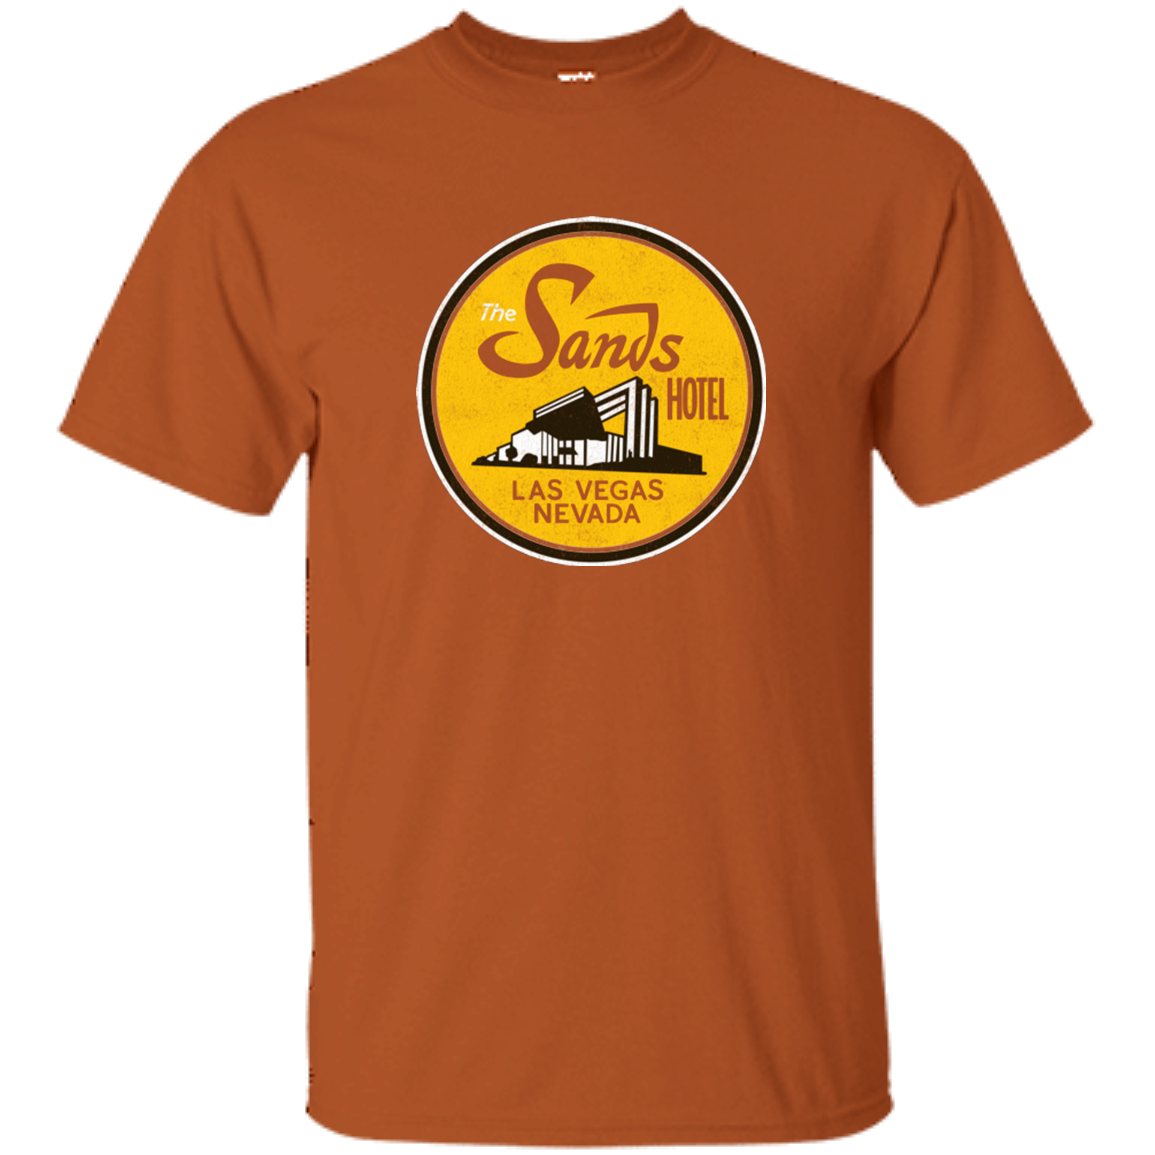 Las Vegas Sands Hotel T-Shirt - Texas Orange - T-Shirts